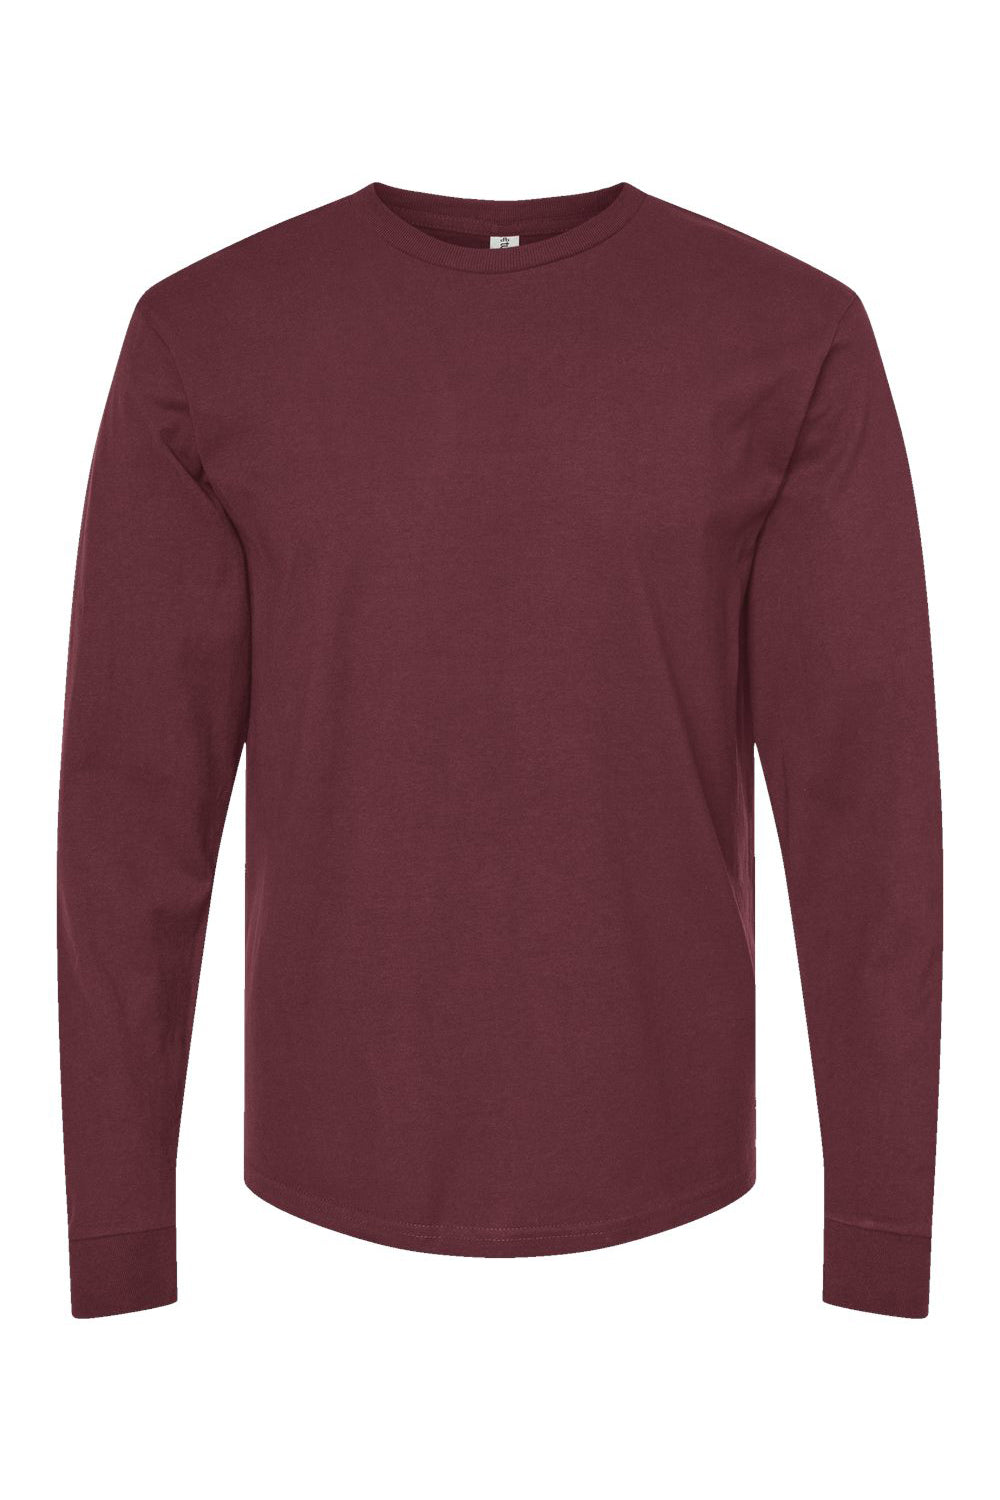 Tultex 291 Mens Jersey Long Sleeve Crewneck T-Shirt Burgundy Flat Front